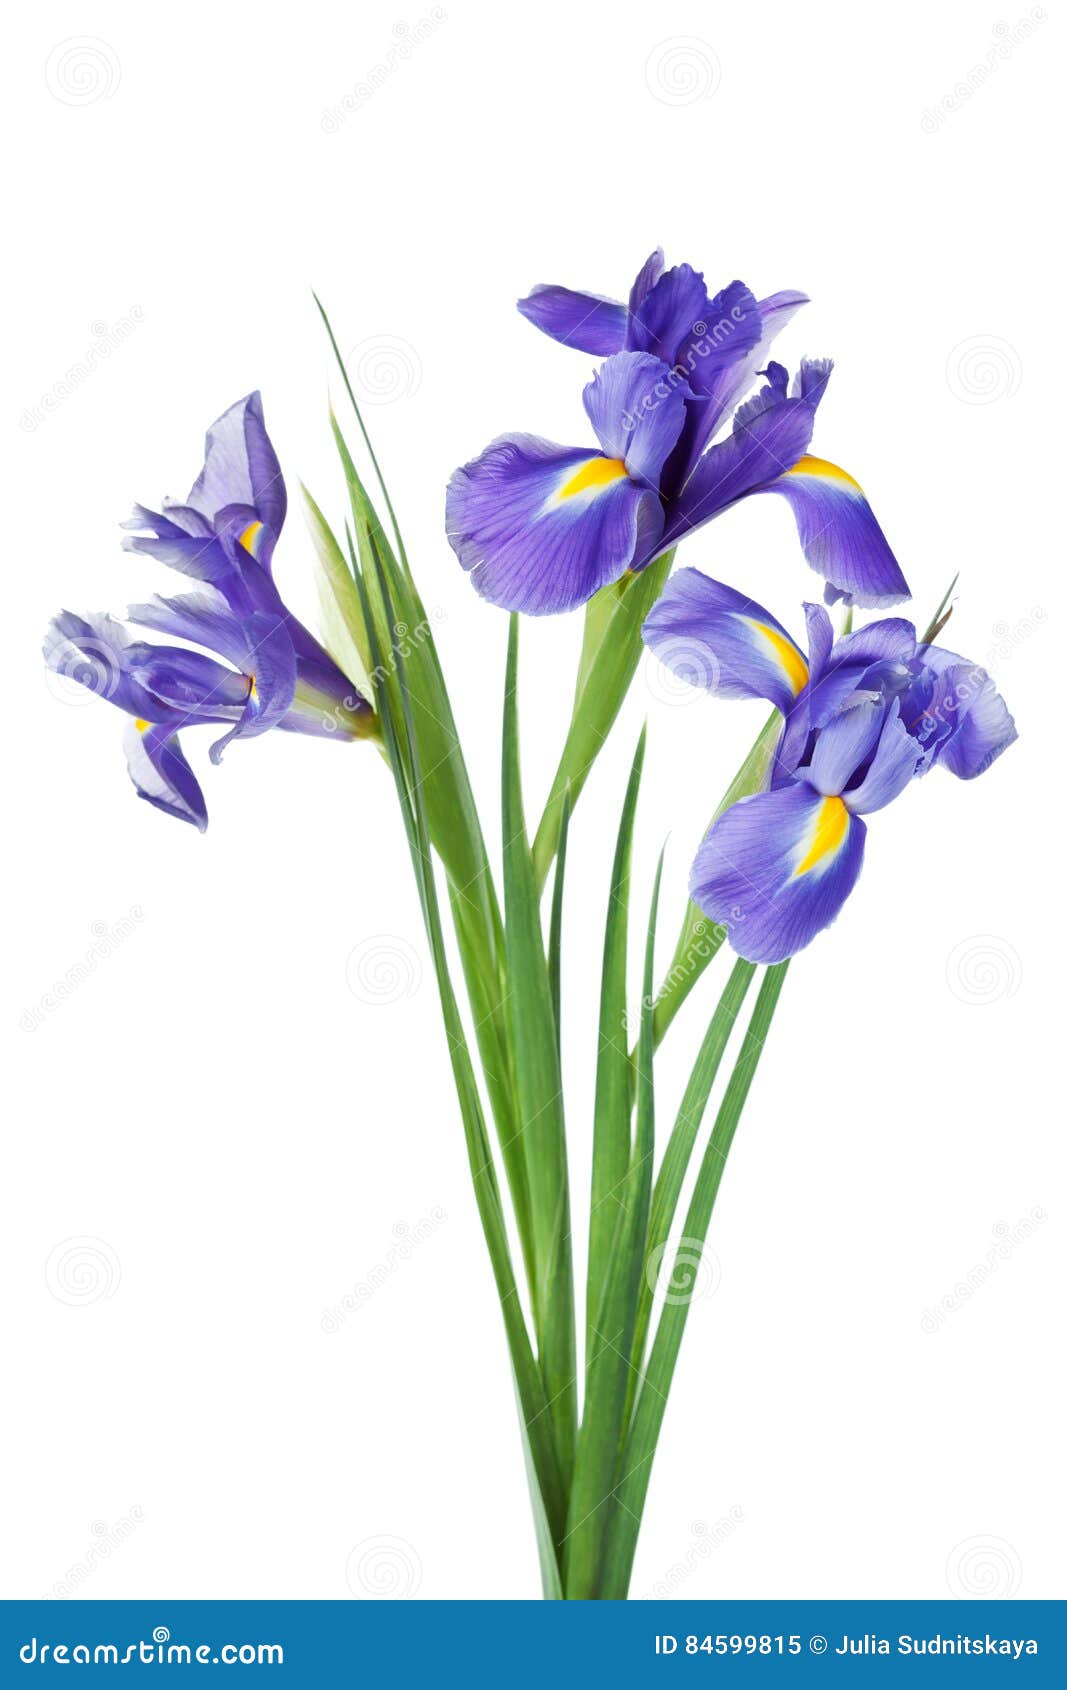 Three Iris Flowers Isolated on White Background, Beautiful Spring ...